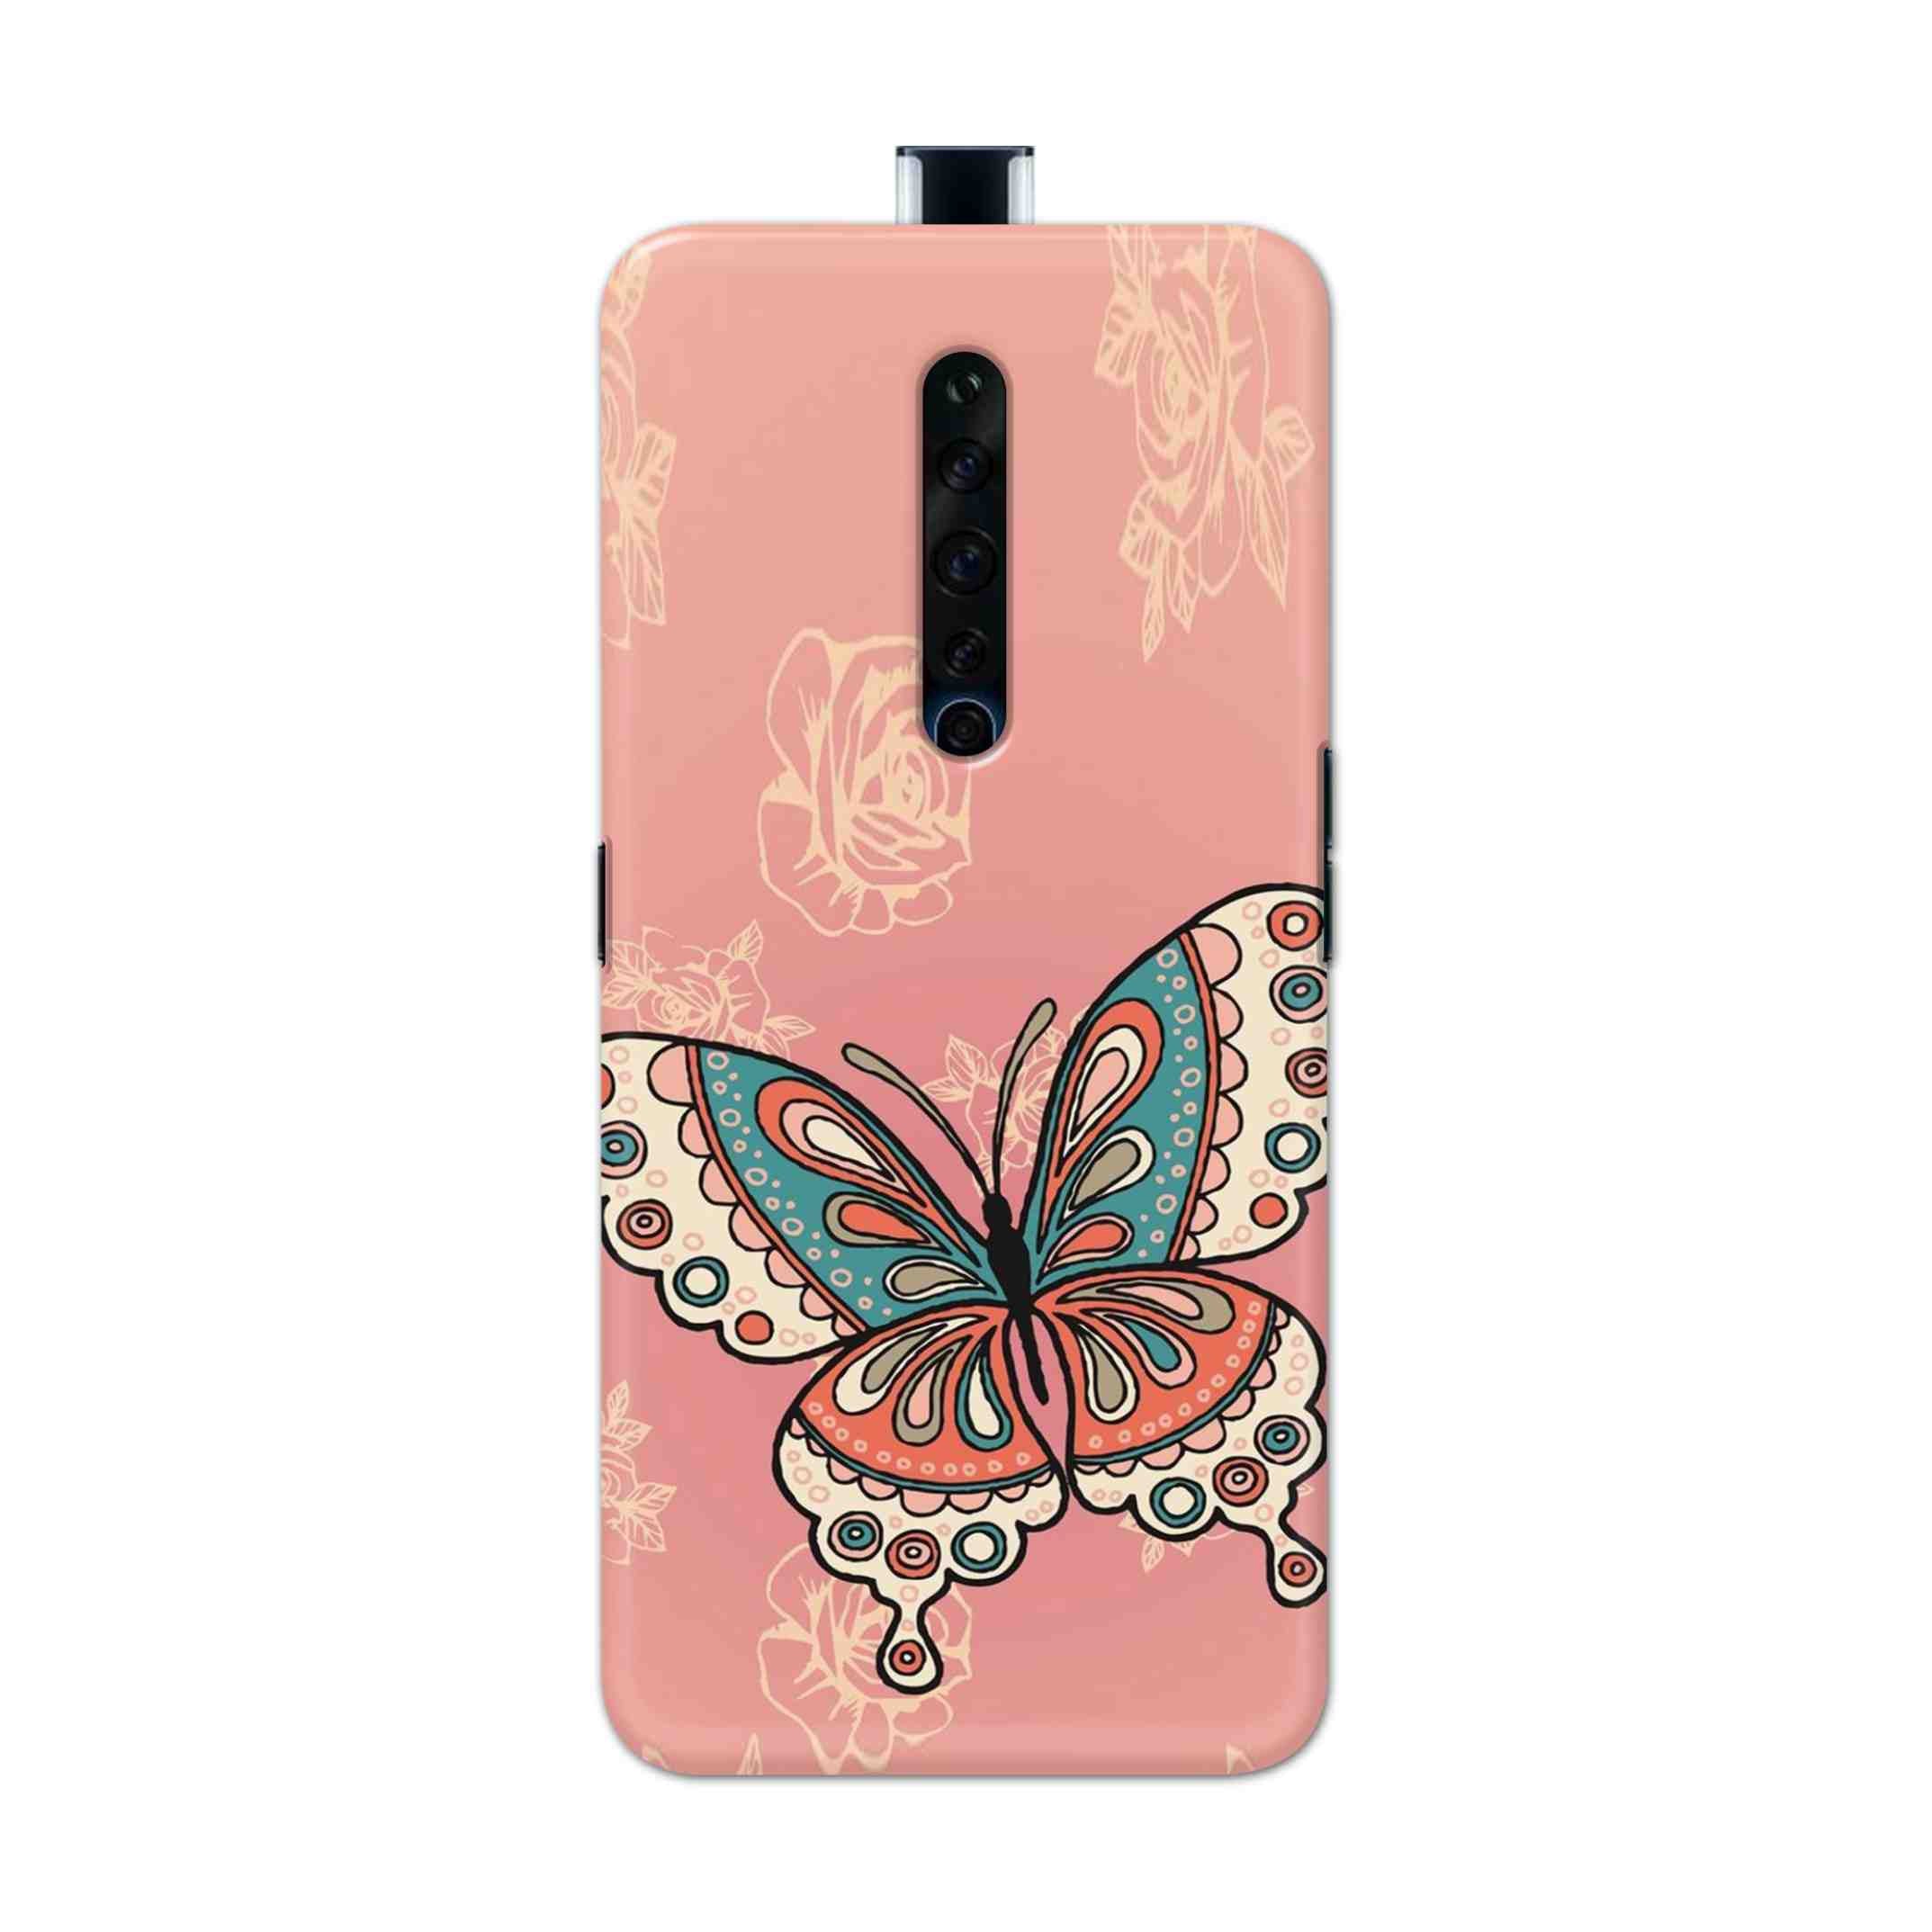 Buy Butterfly Hard Back Mobile Phone Case Cover For Oppo Reno 2Z Online